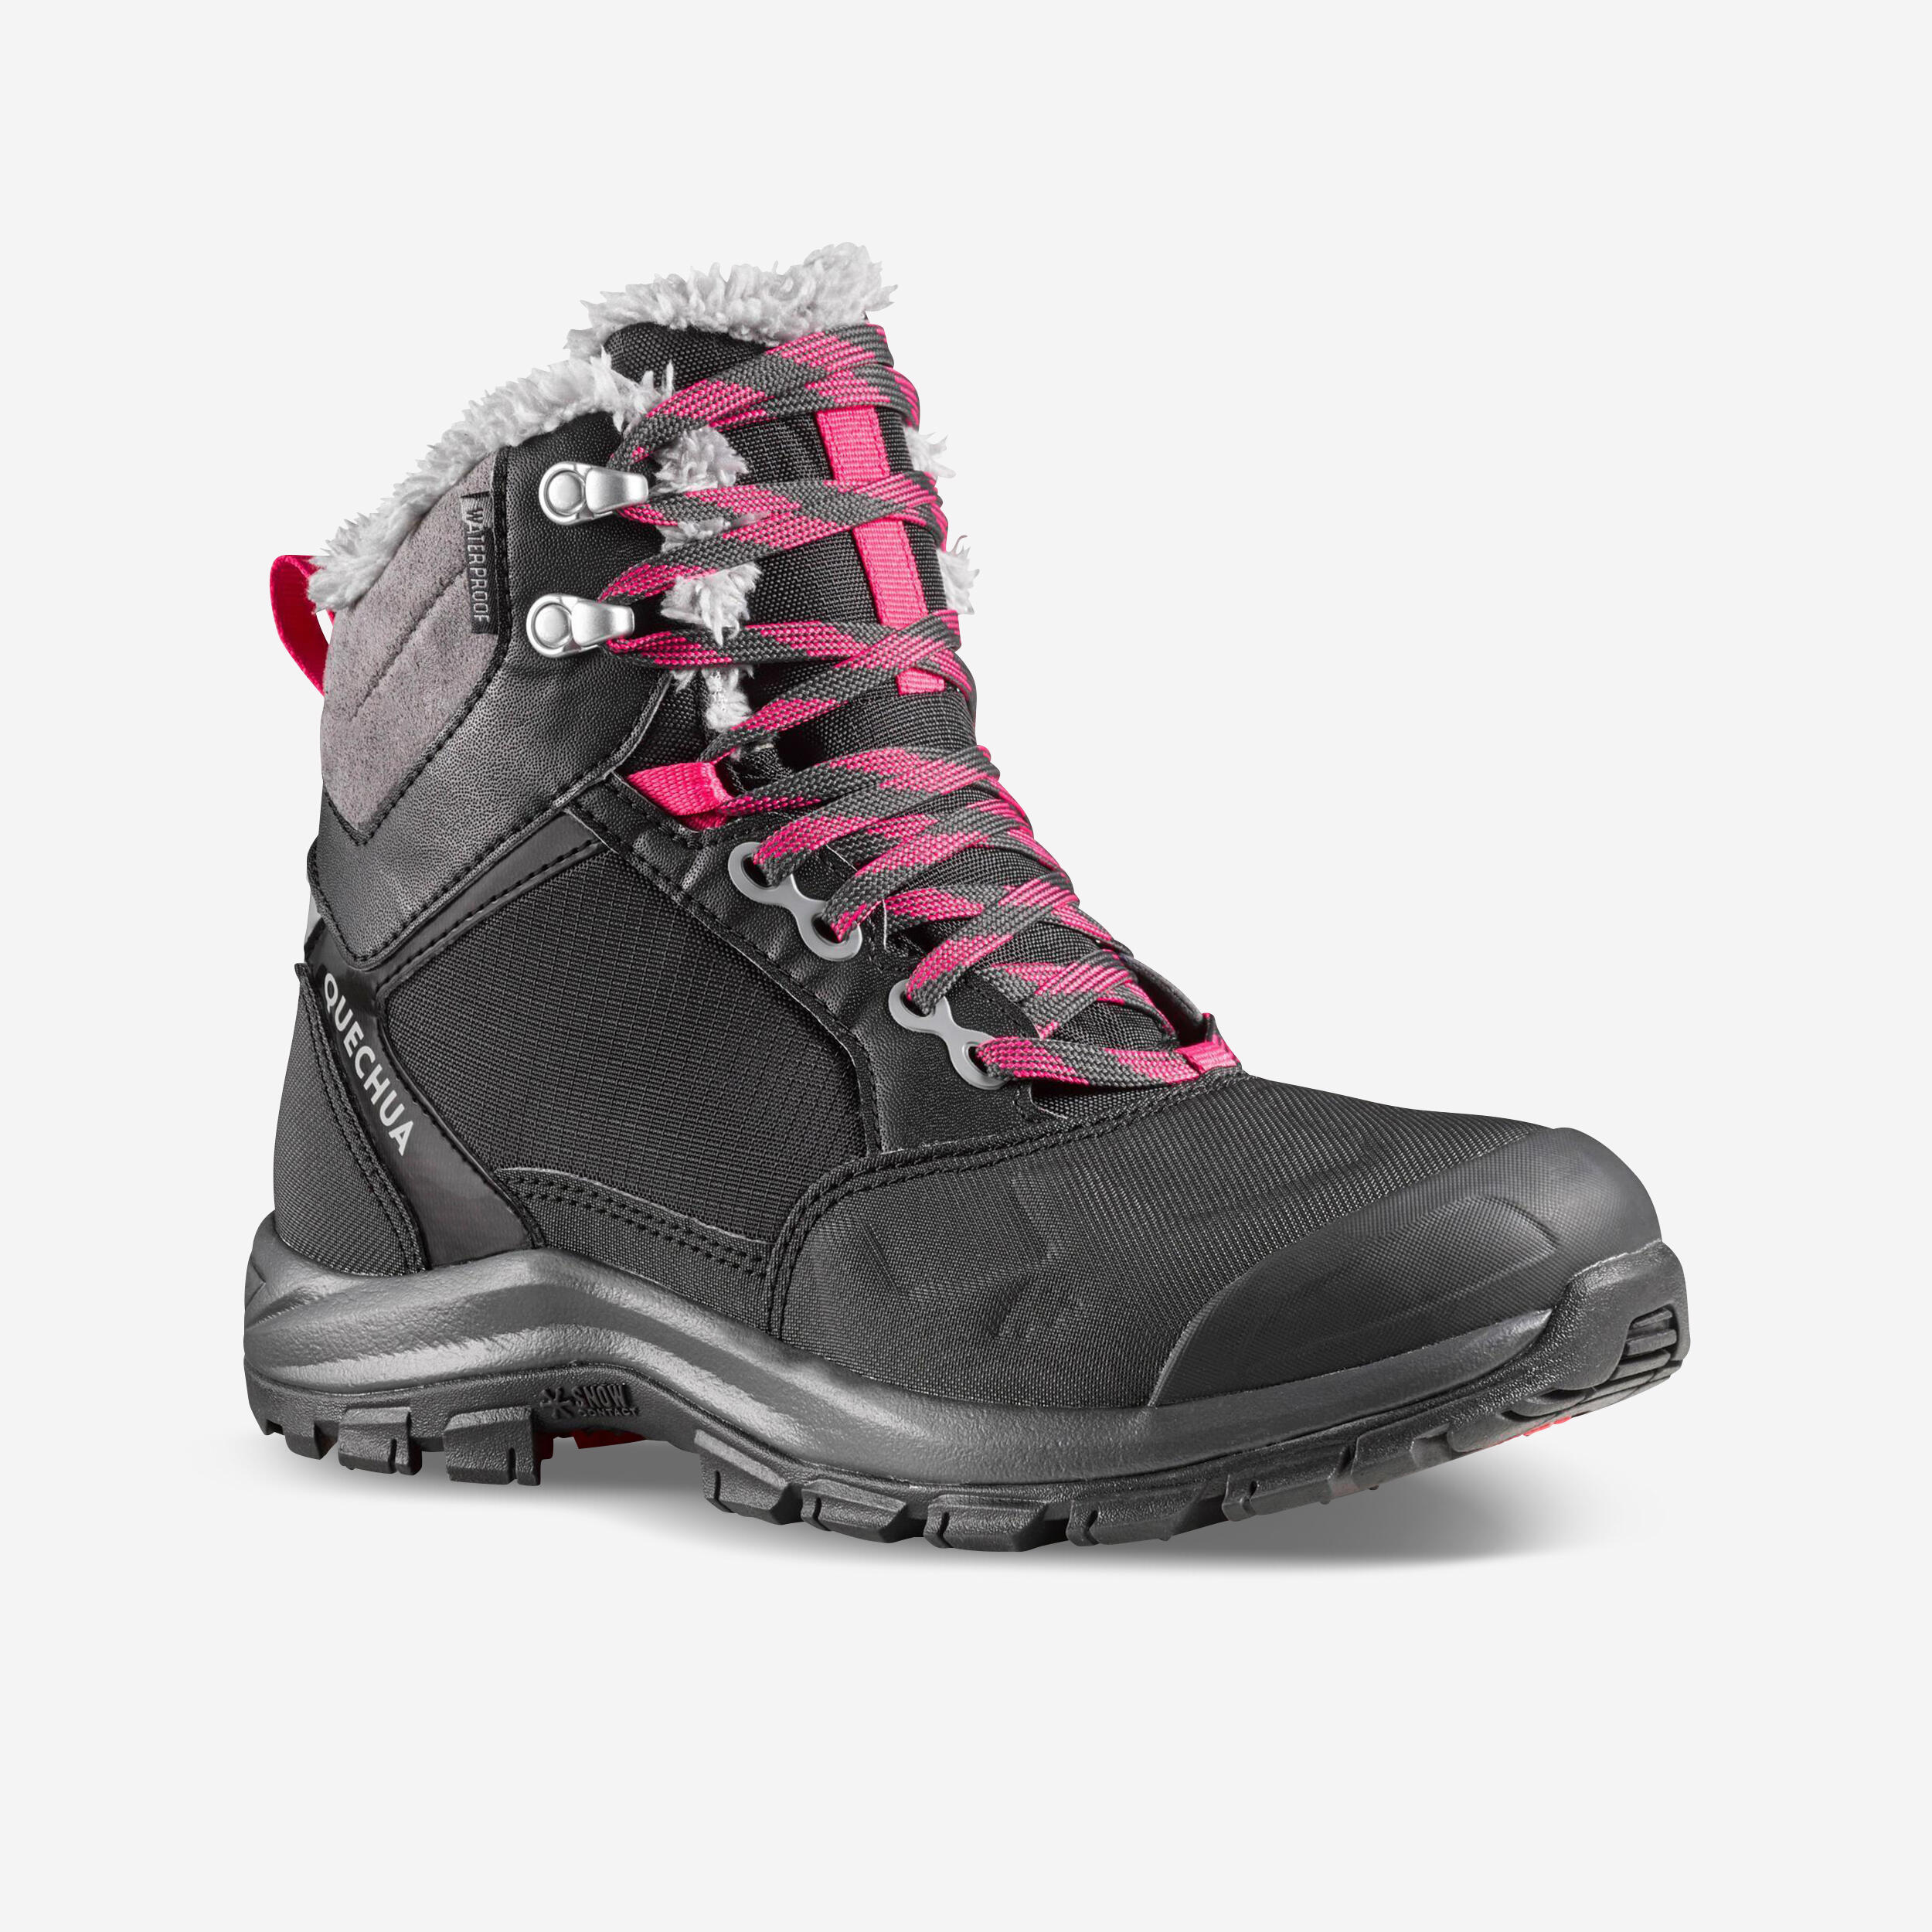 QUECHUA Women's Warm and Waterproof Hiking Boots - SH500 mountain MID